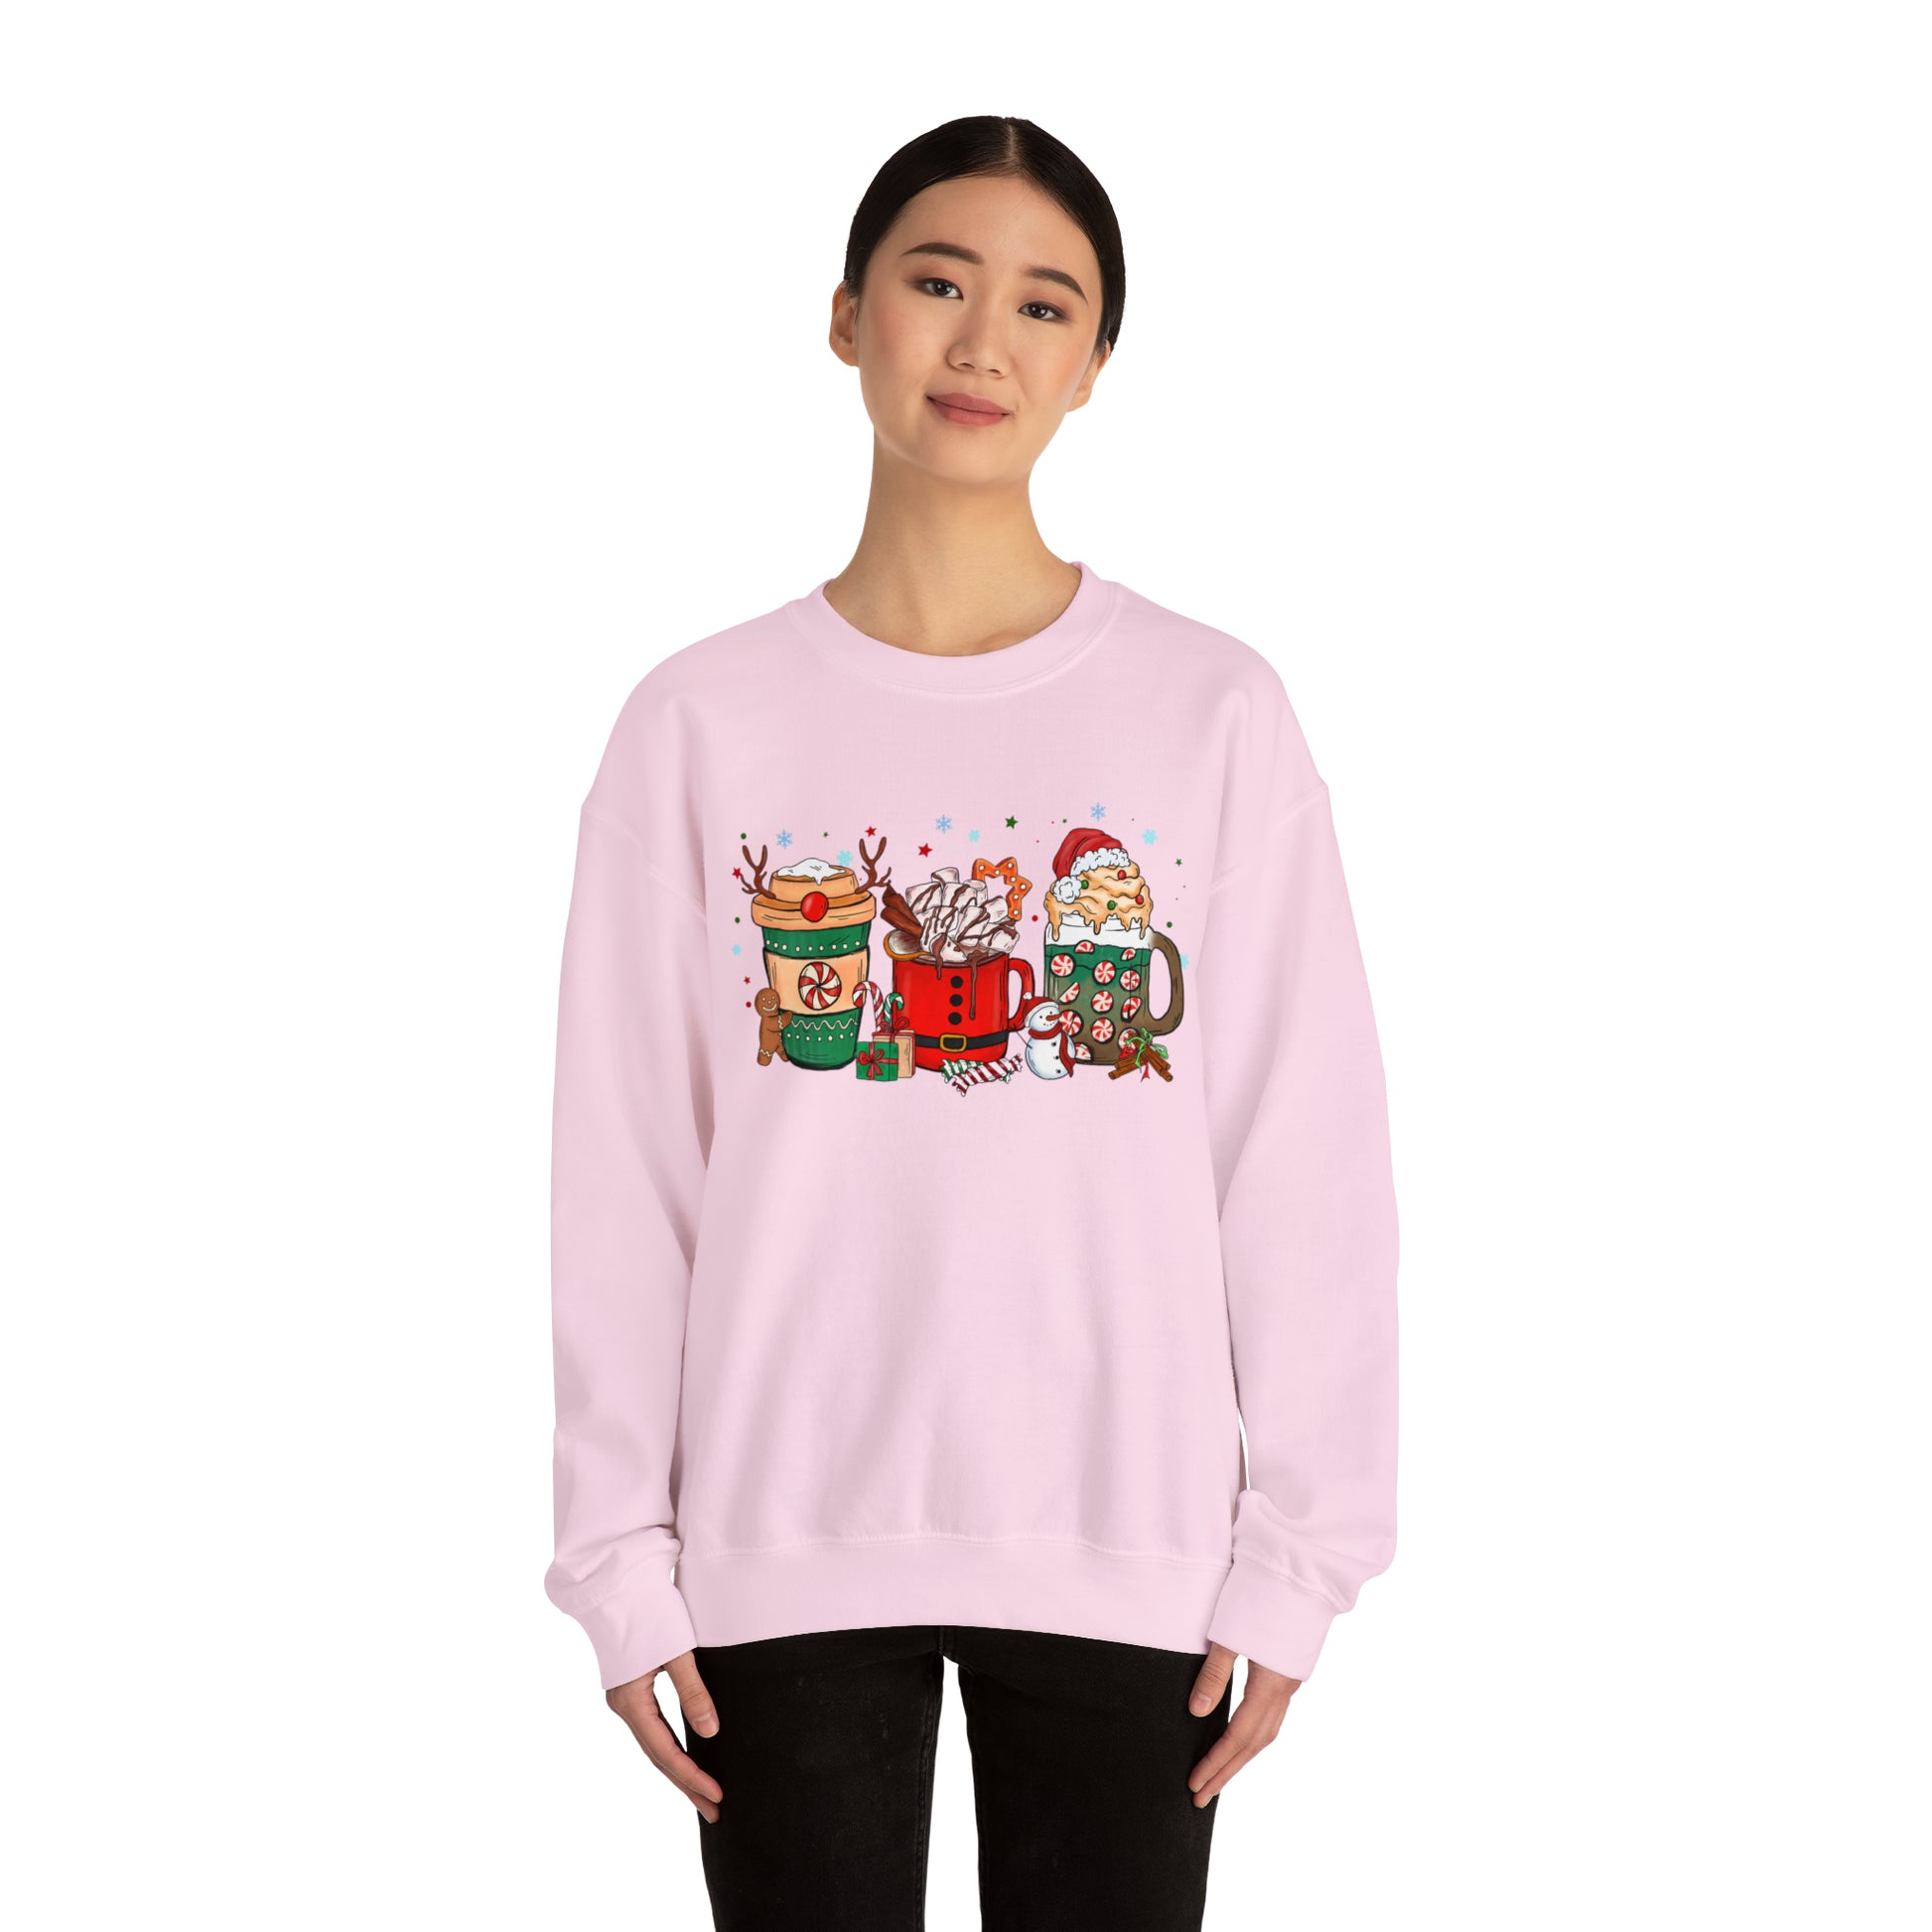 Hot Coffee Christmas Sweatshirt, Coffee Lover Latte Drink Christmas Sweater, Women Holiday Sweatshirt, Winter Xmas Tee, Christmas Gift Shirt - Teez Closet